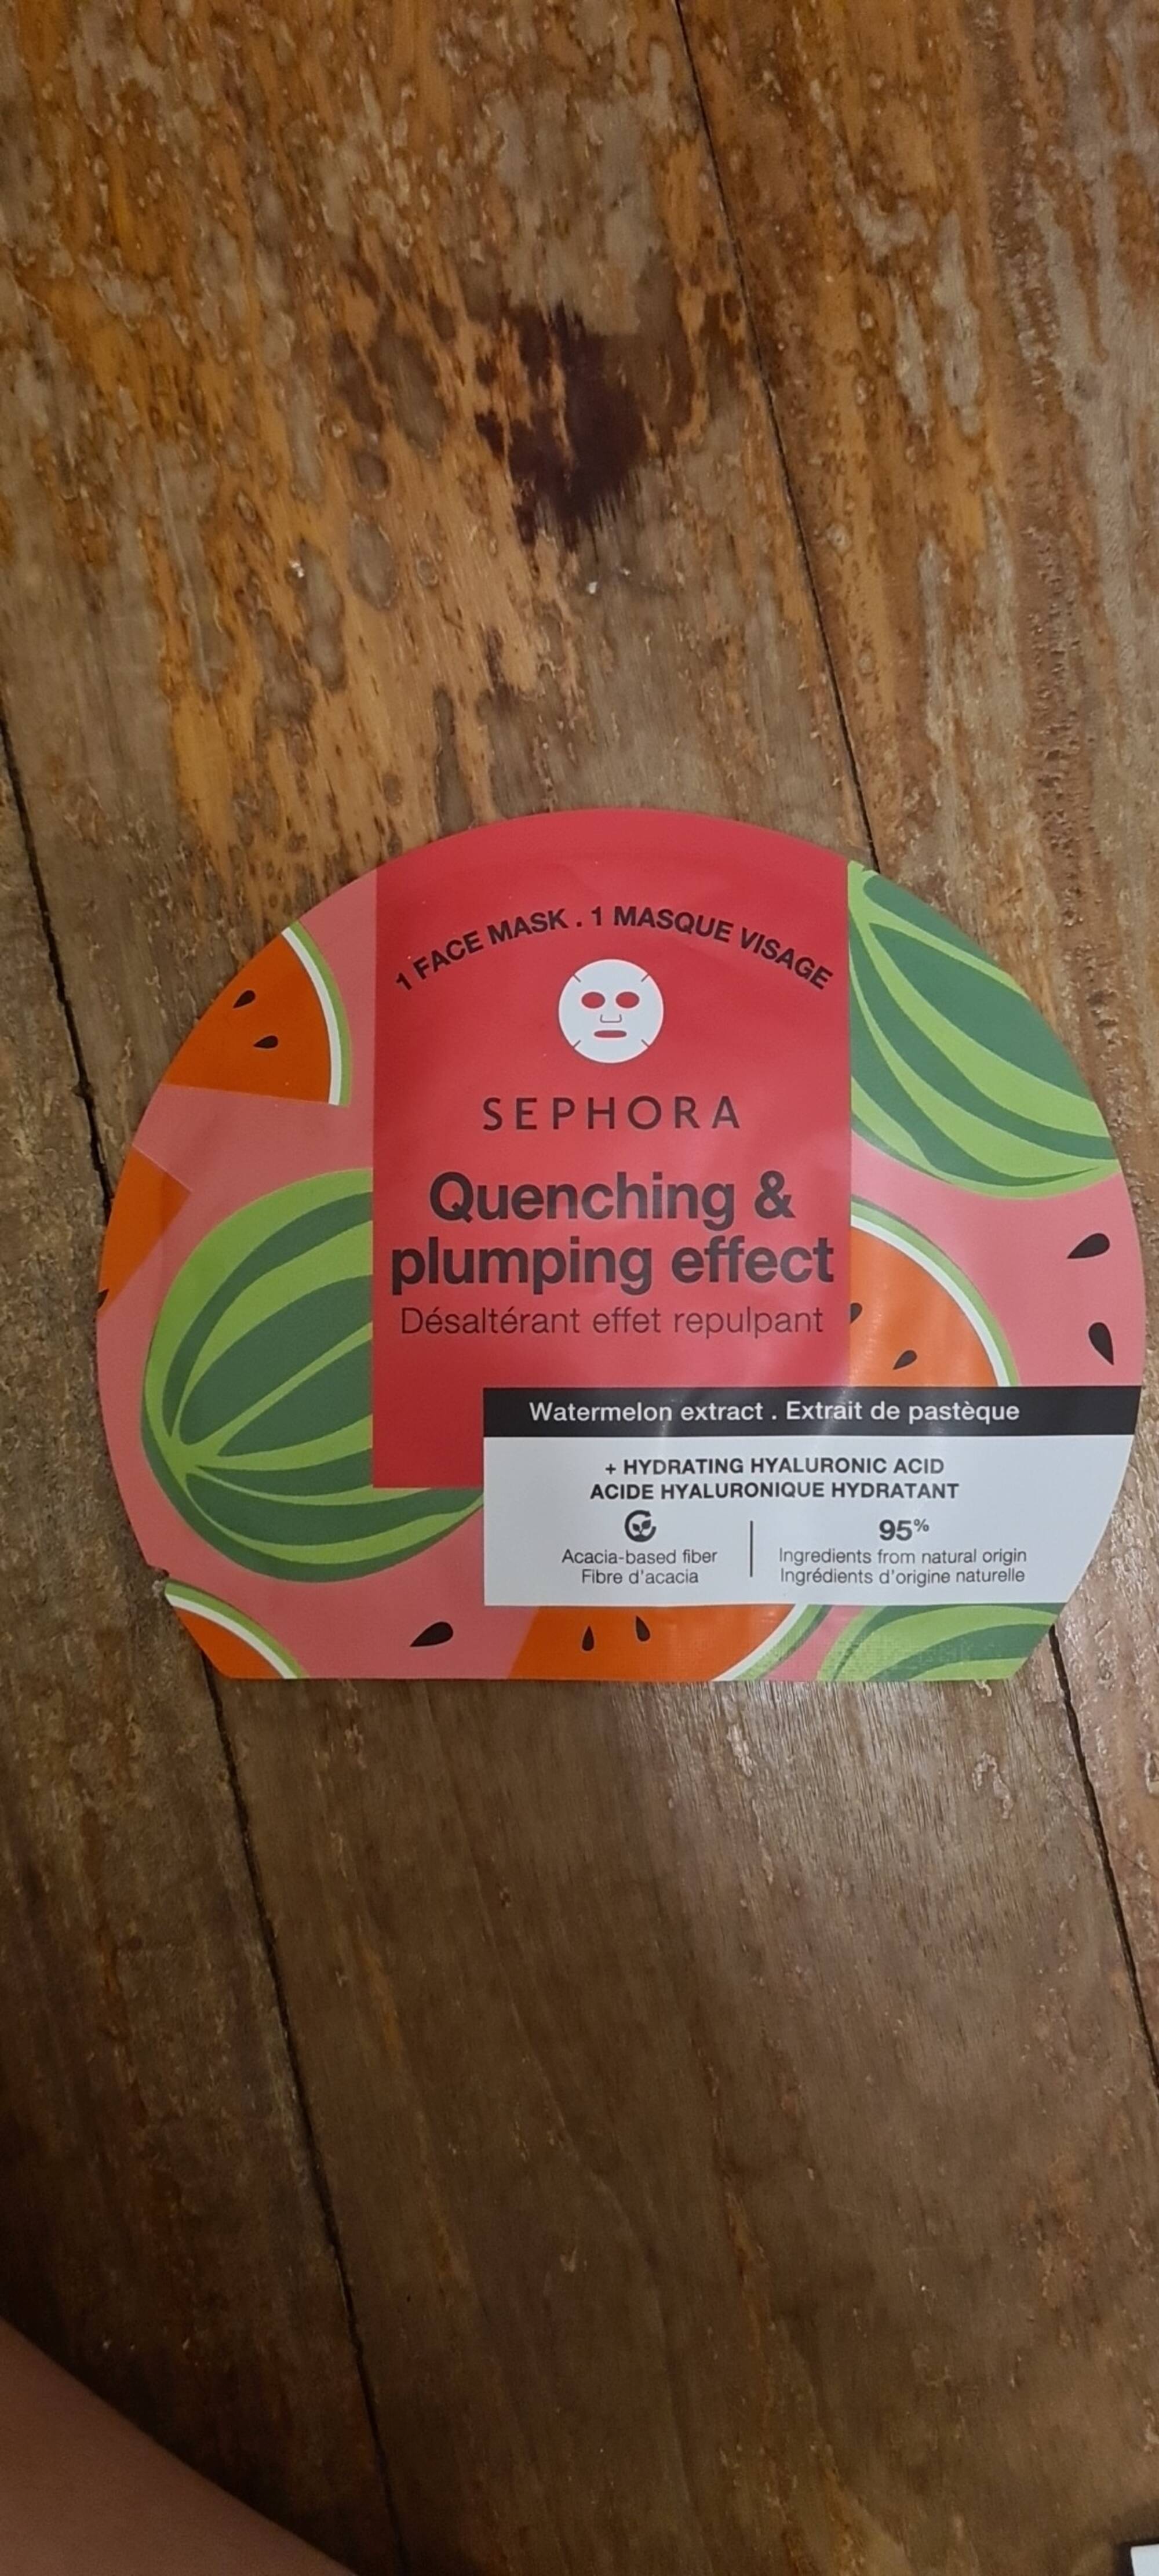 SEPHORA - Quenching & plumping effect - Masque visage